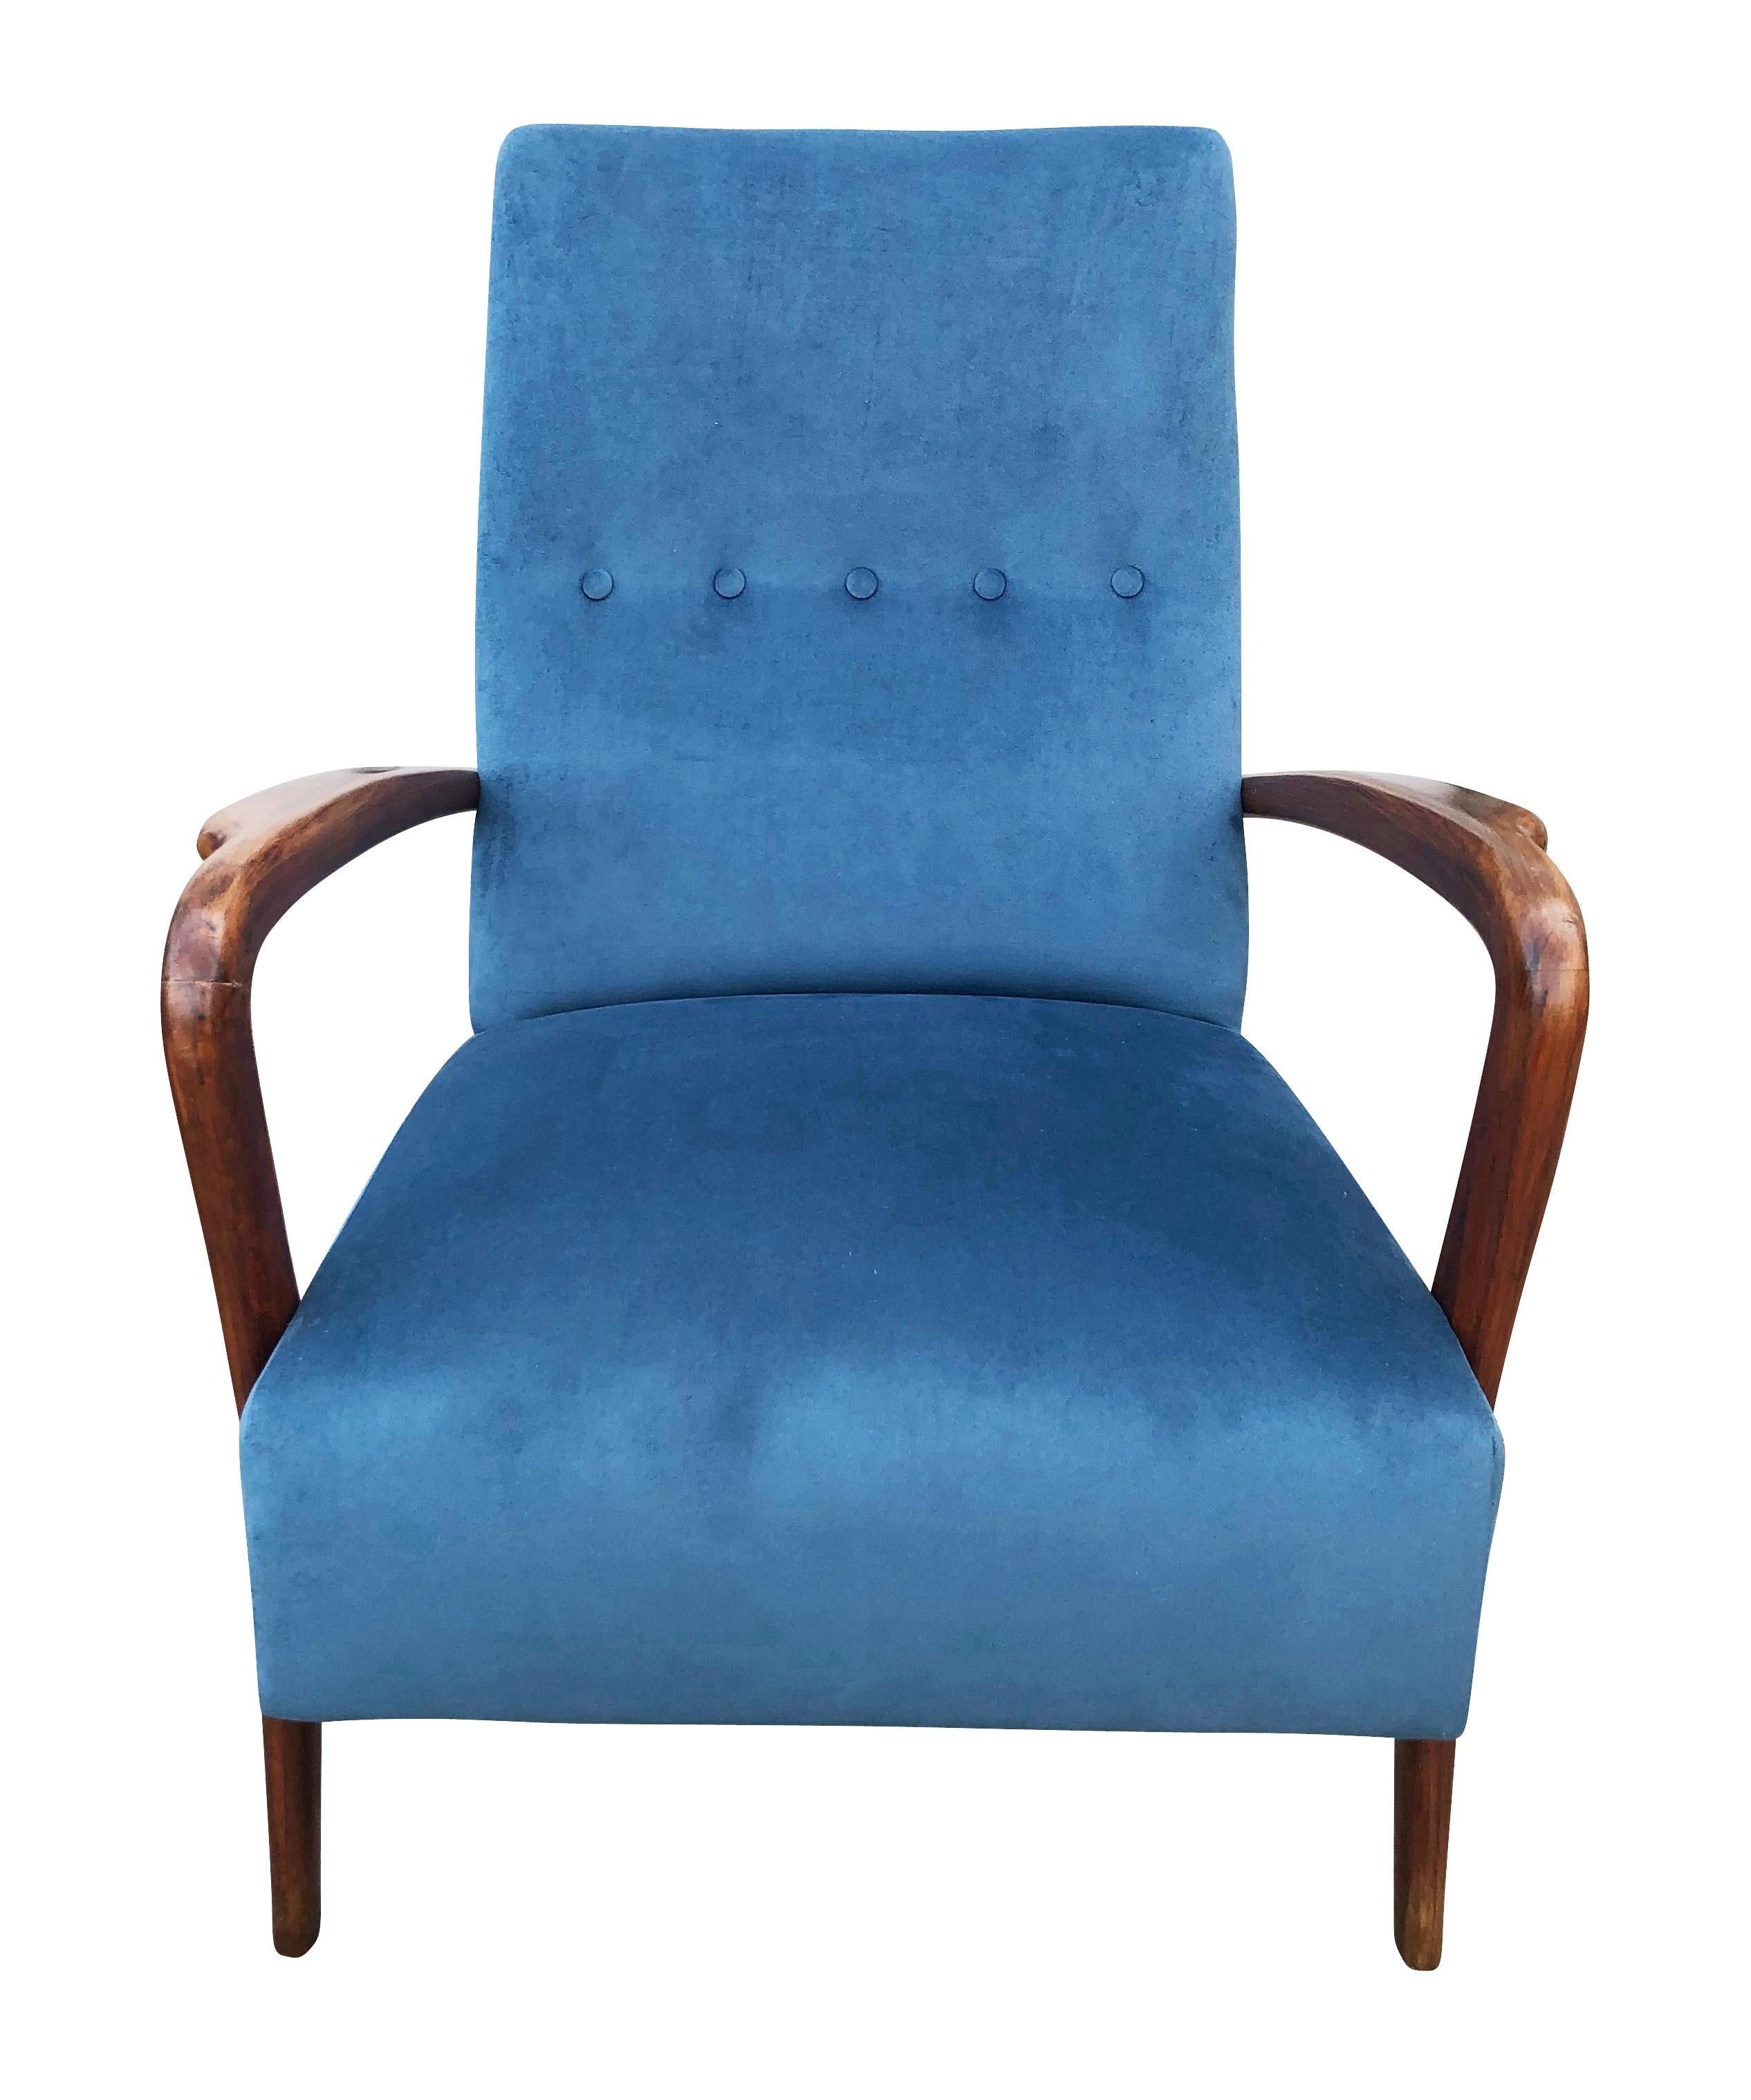 Mid-20th Century Italian Midcentury Armchair in the Manner of Gio Ponti